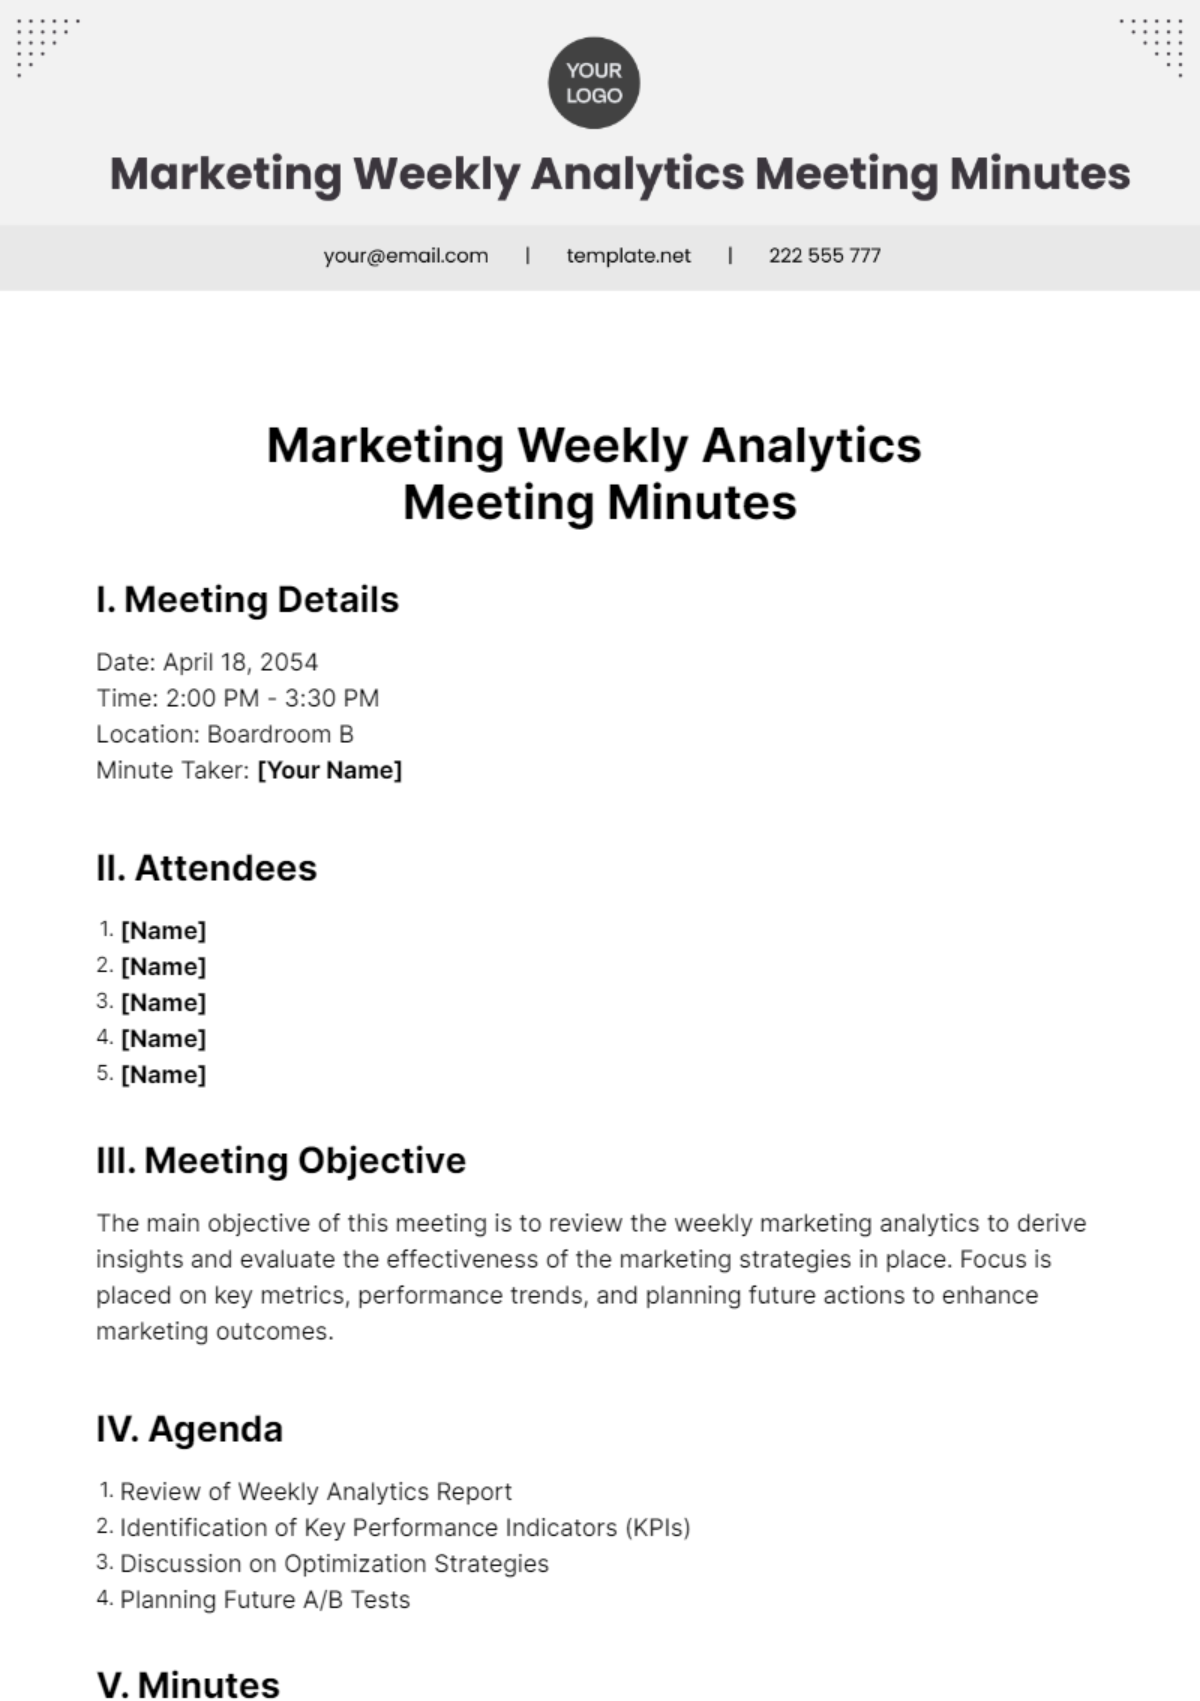 Free Marketing Weekly Analytics Meeting Minutes Template